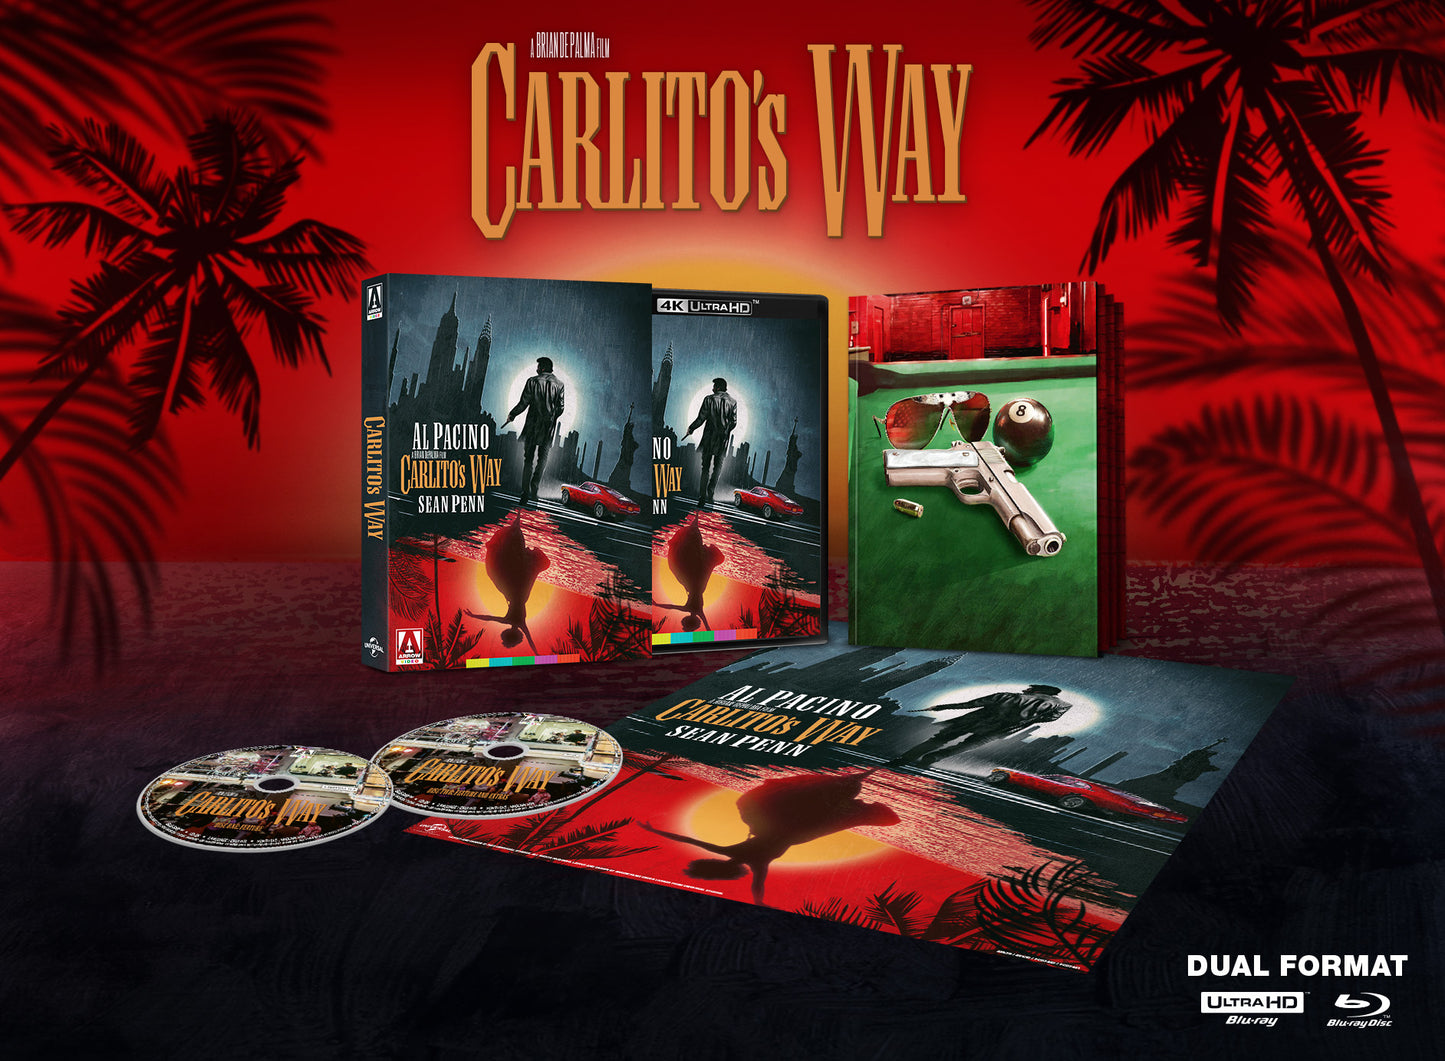 Carlito's Way Limited Edition Arrow Video 4K UHD/Blu-Ray [NEW] [SLIPCOVER]